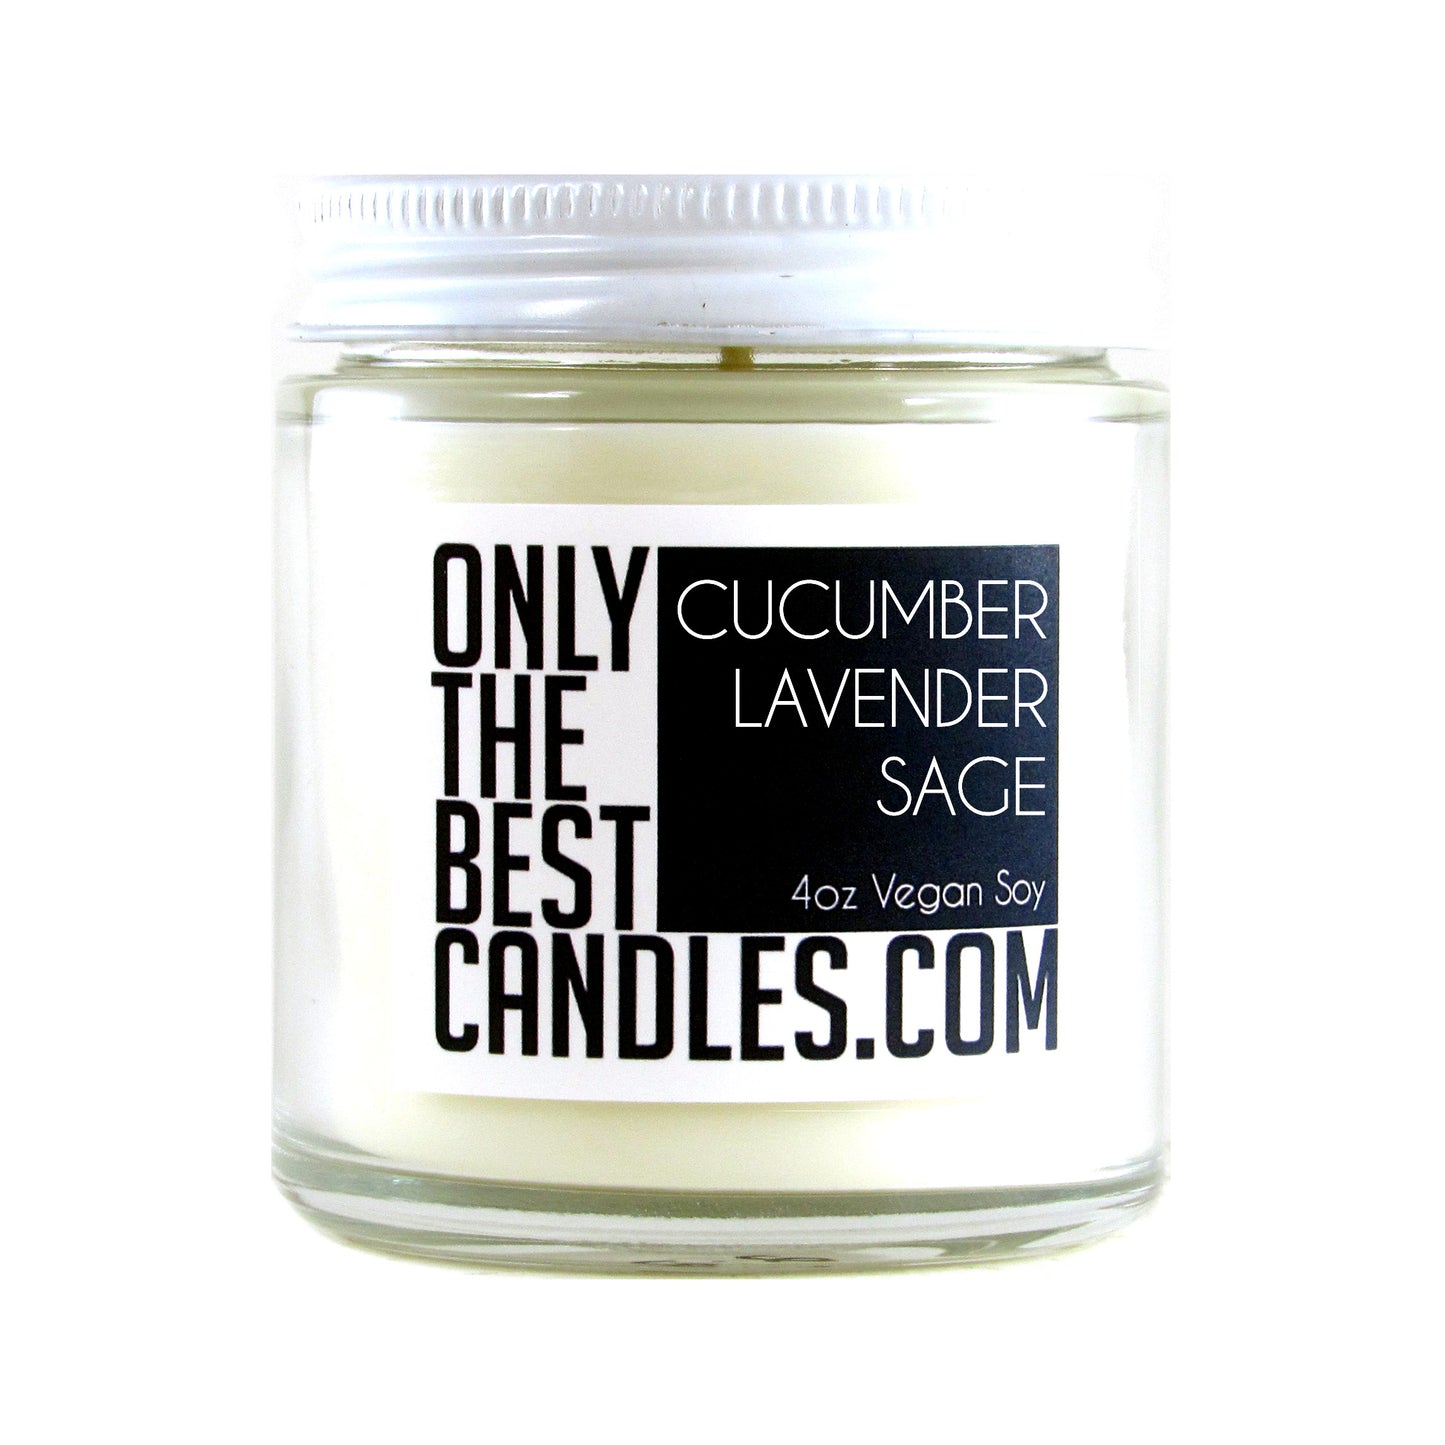 Cucumber Lavender Sage 4oz Candle